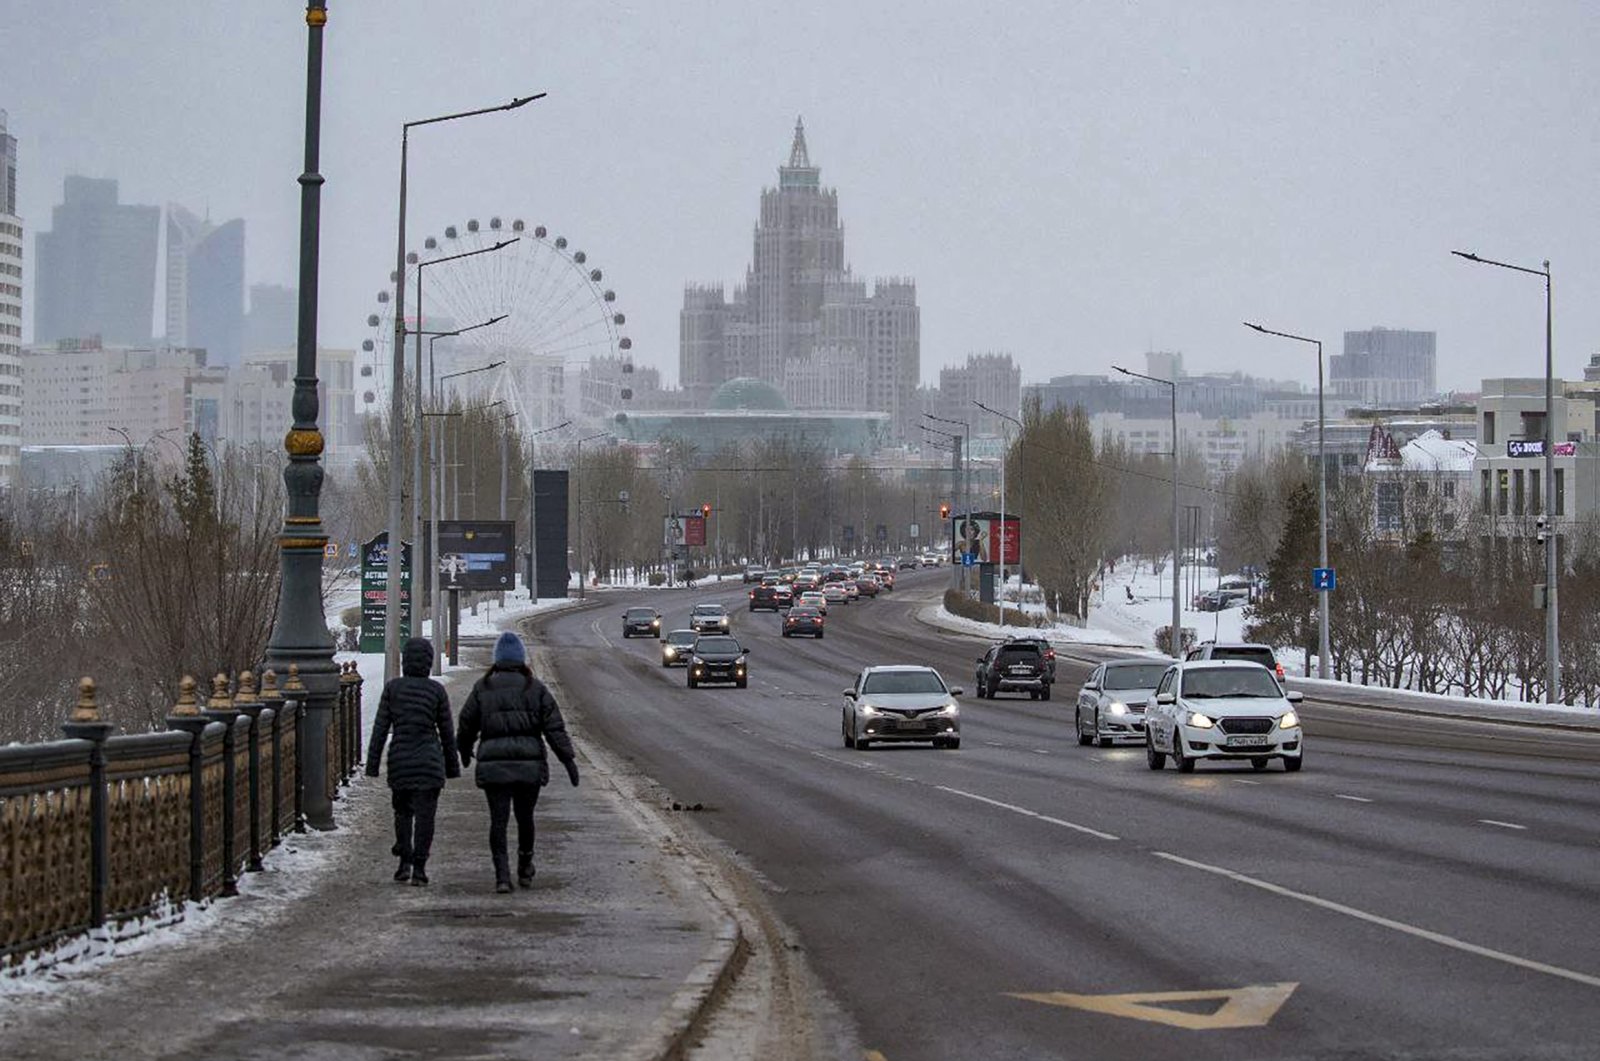 Kazakh people walk down a street in downtown Nur-Sultan, the capital city of Kazakhstan, Jan. 8, 2022. (EPA Photo)